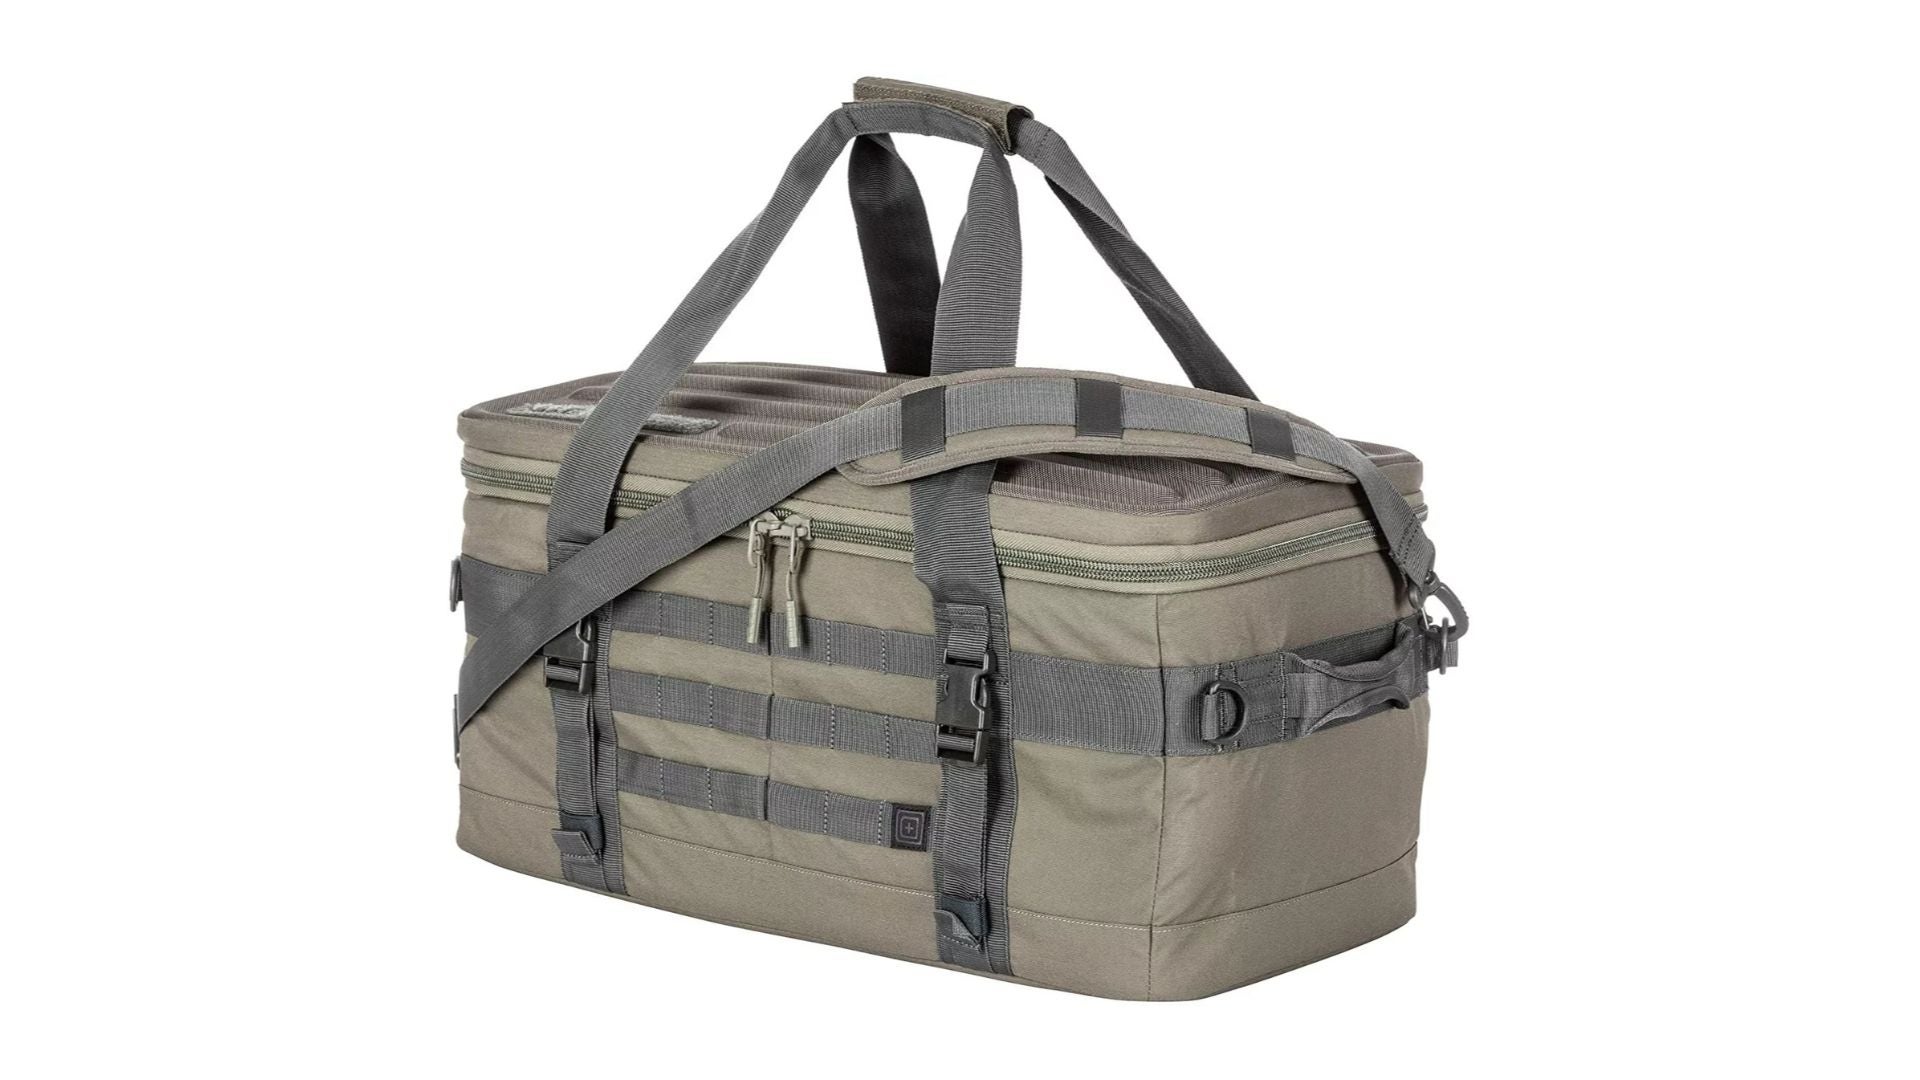 26" Tactical Military Duffle Camo Gun Ammo Range Gear Bag Hunting Duffel Bag